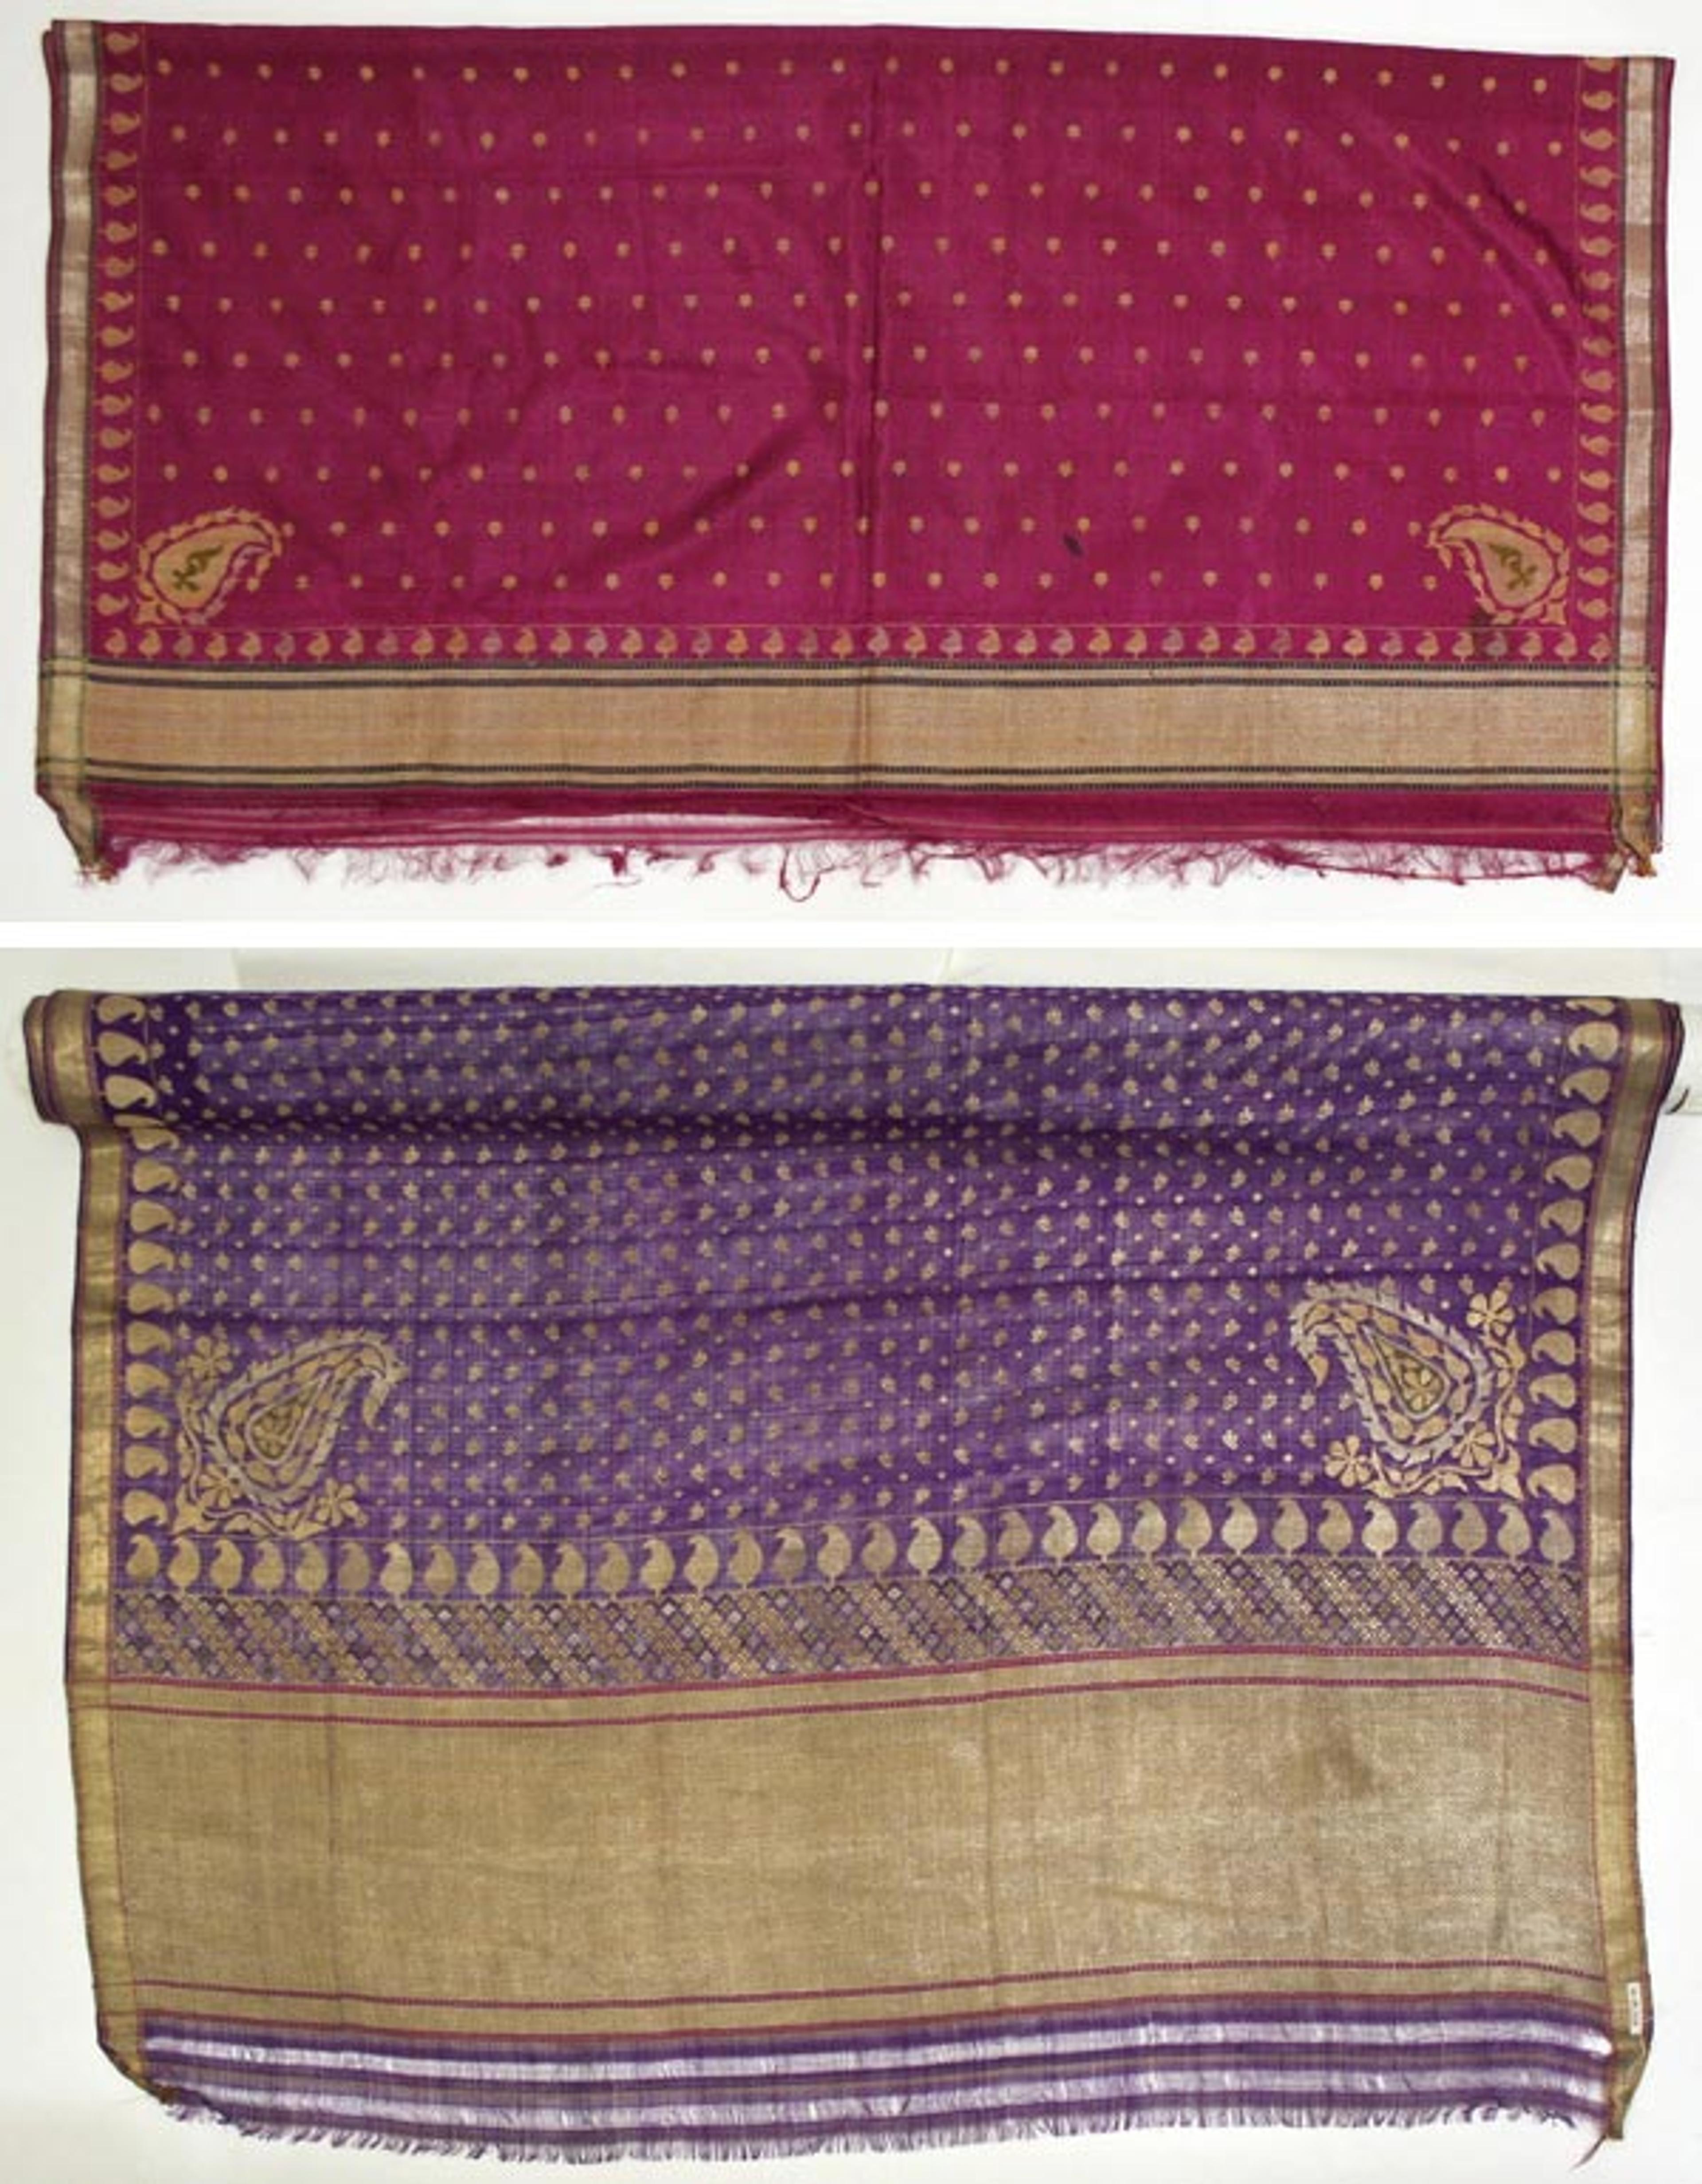 Top: Sari, 1800–1941. Indian. Silk. The Metropolitan Museum of Art, New York, Gift of Mrs. Van S. Merle-Smith, 1941 (C.I.41.110.185). Bottom: Sari, 1800–1958. Indian. Silk. The Metropolitan Museum of Art, New York, Gift of Ethel Frankau, 1958 (C.I.58.33.6)